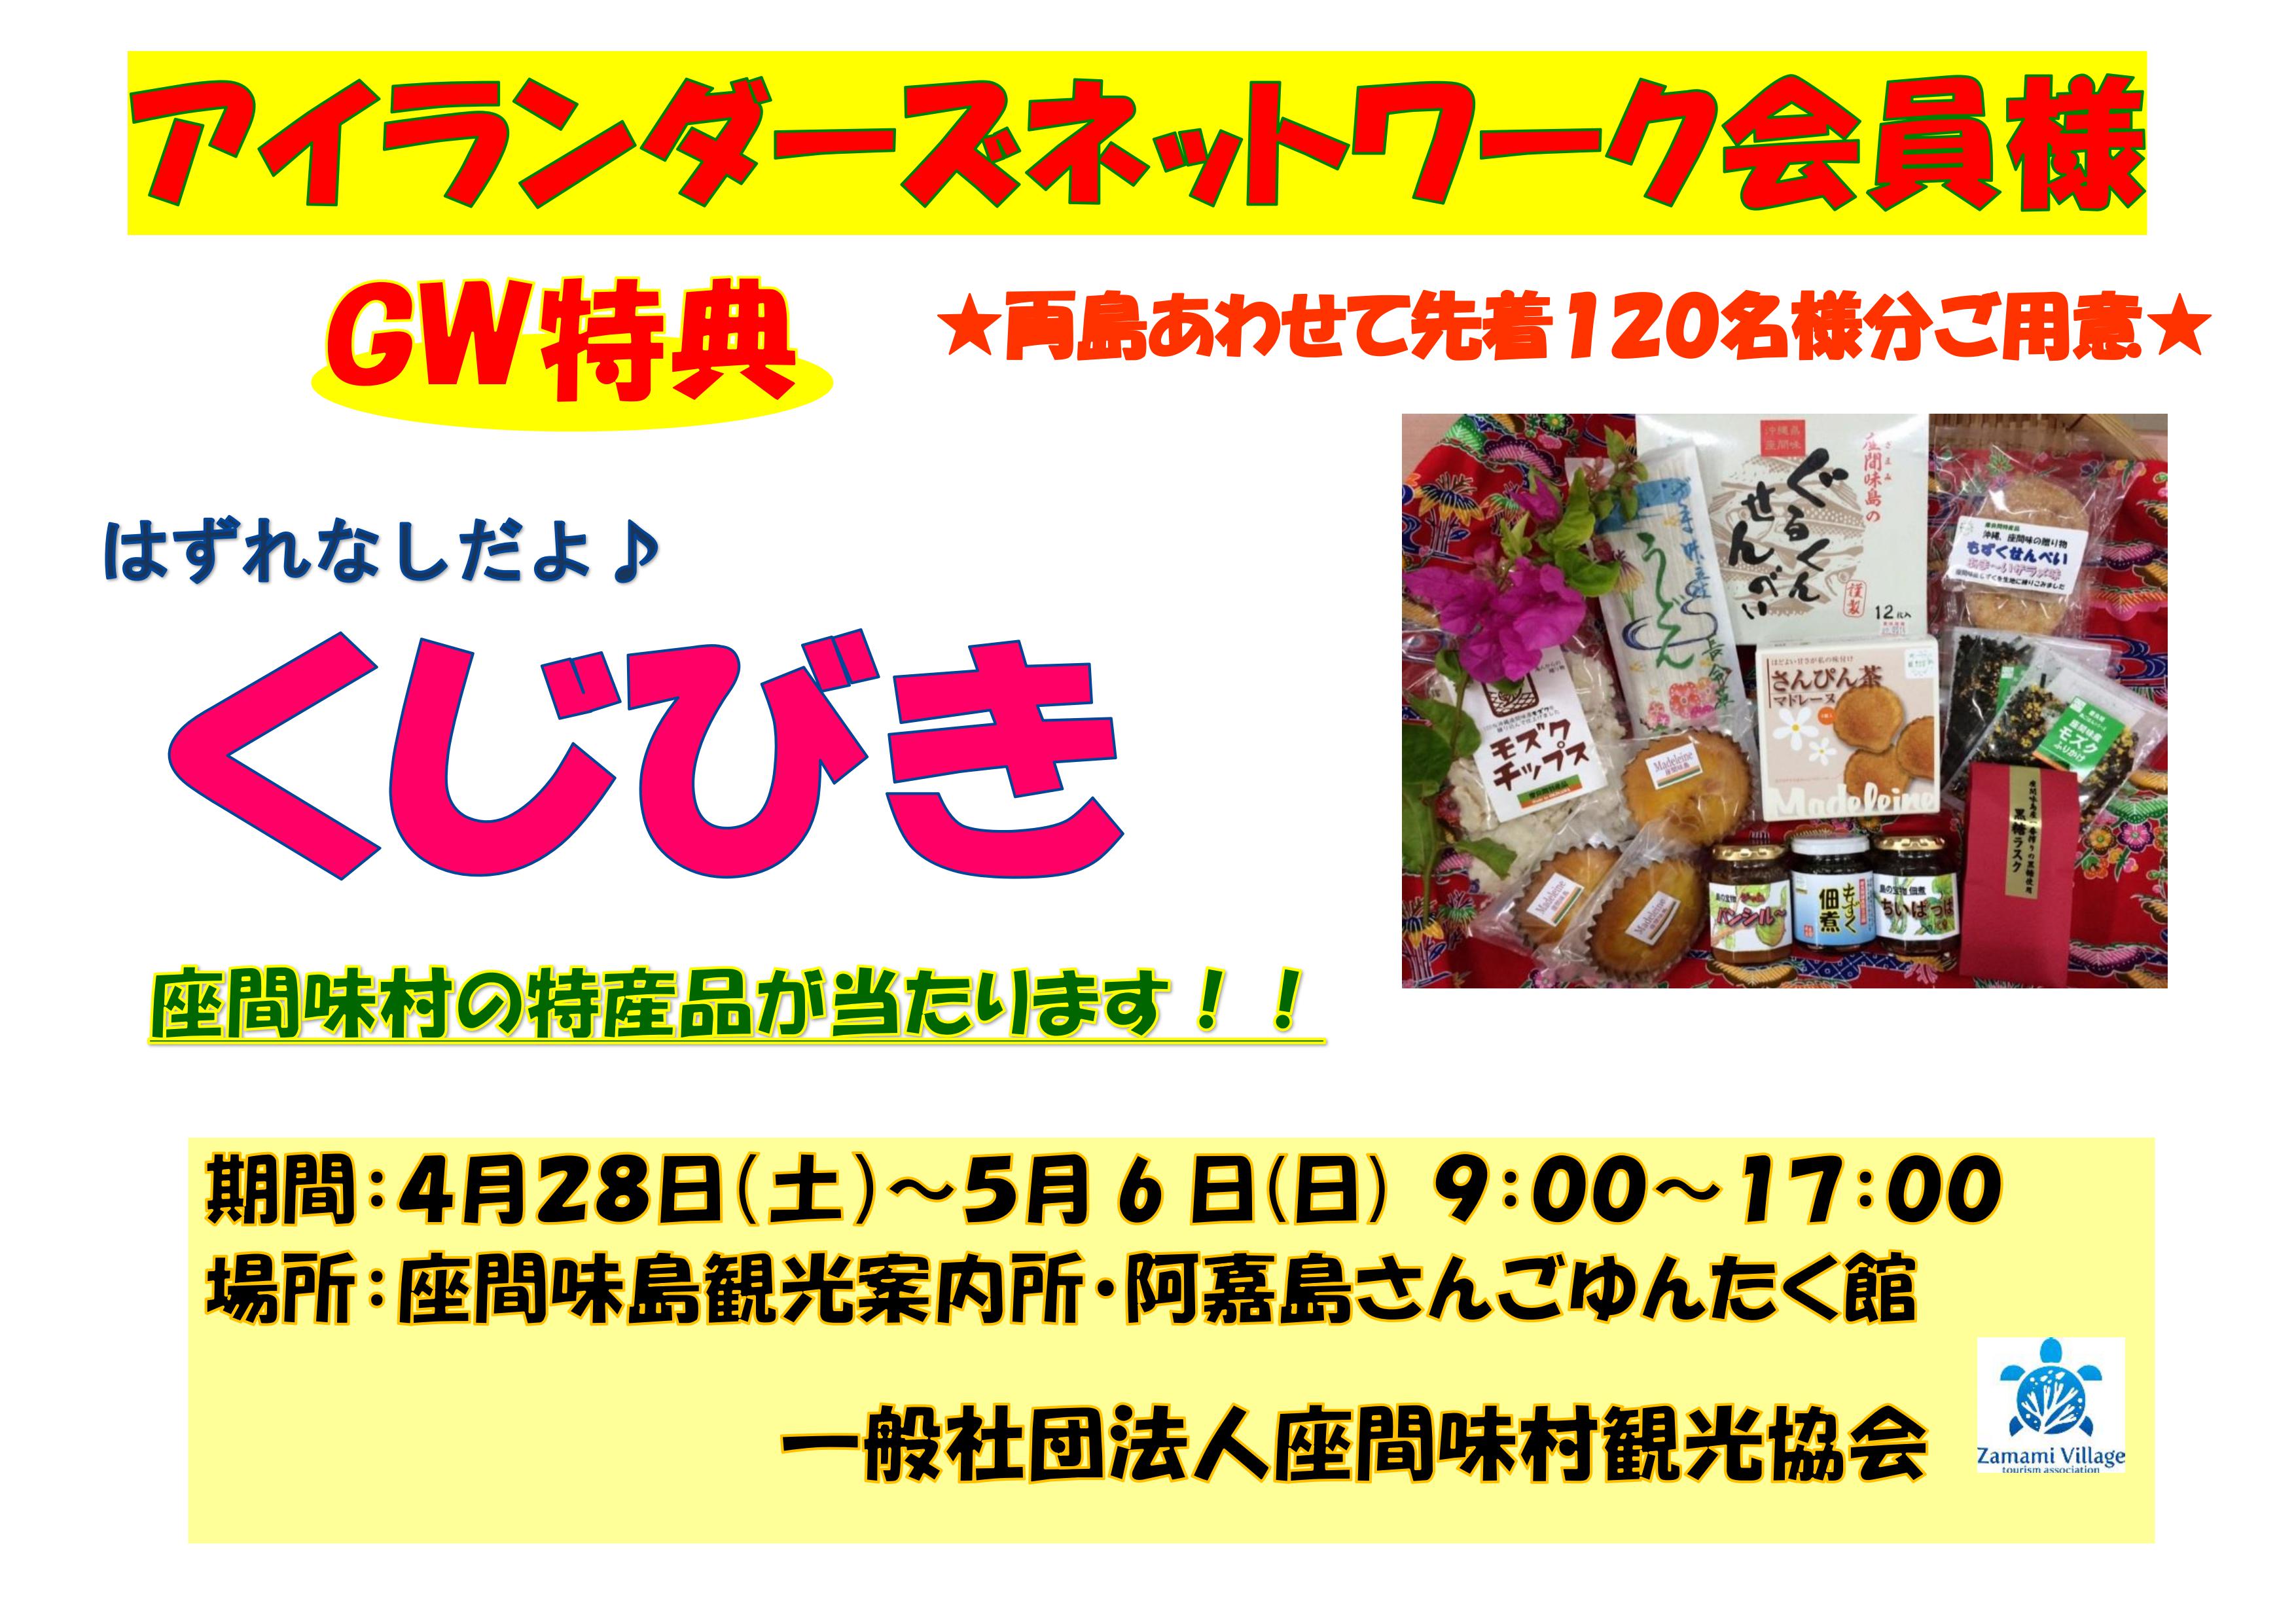 http://www.vill.zamami.okinawa.jp/info/GW%E7%89%B9%E5%85%B82018.jpg